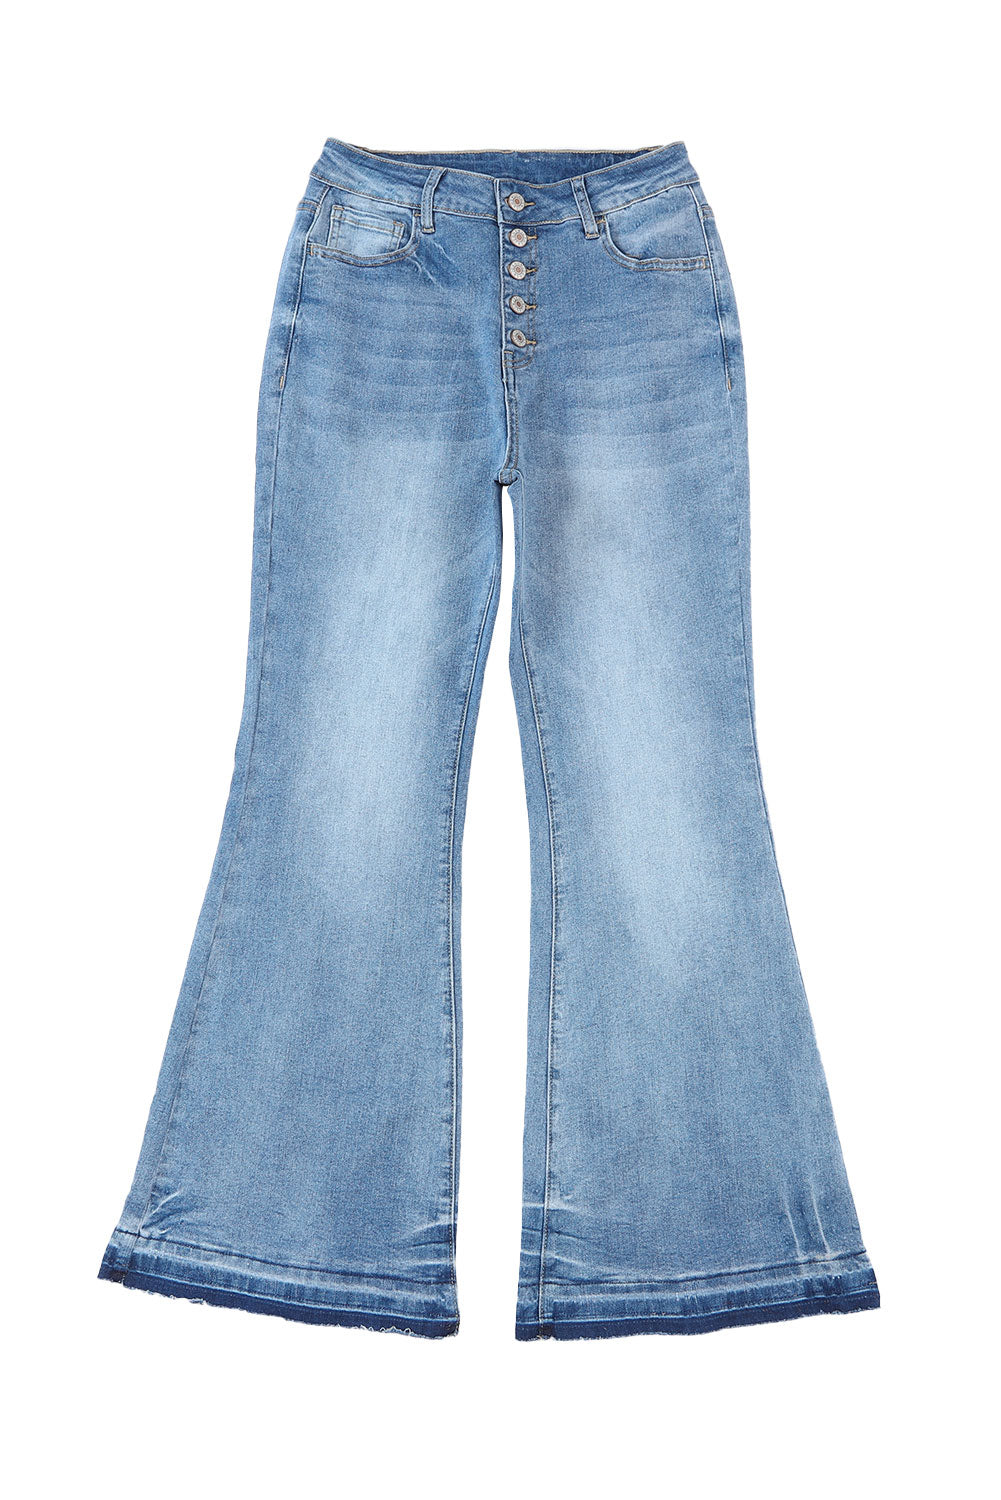 Sky Blue High Waist Buttoned Distressed Flared Womens Jeans - US2EInc Apparel Plug Ltd. Co